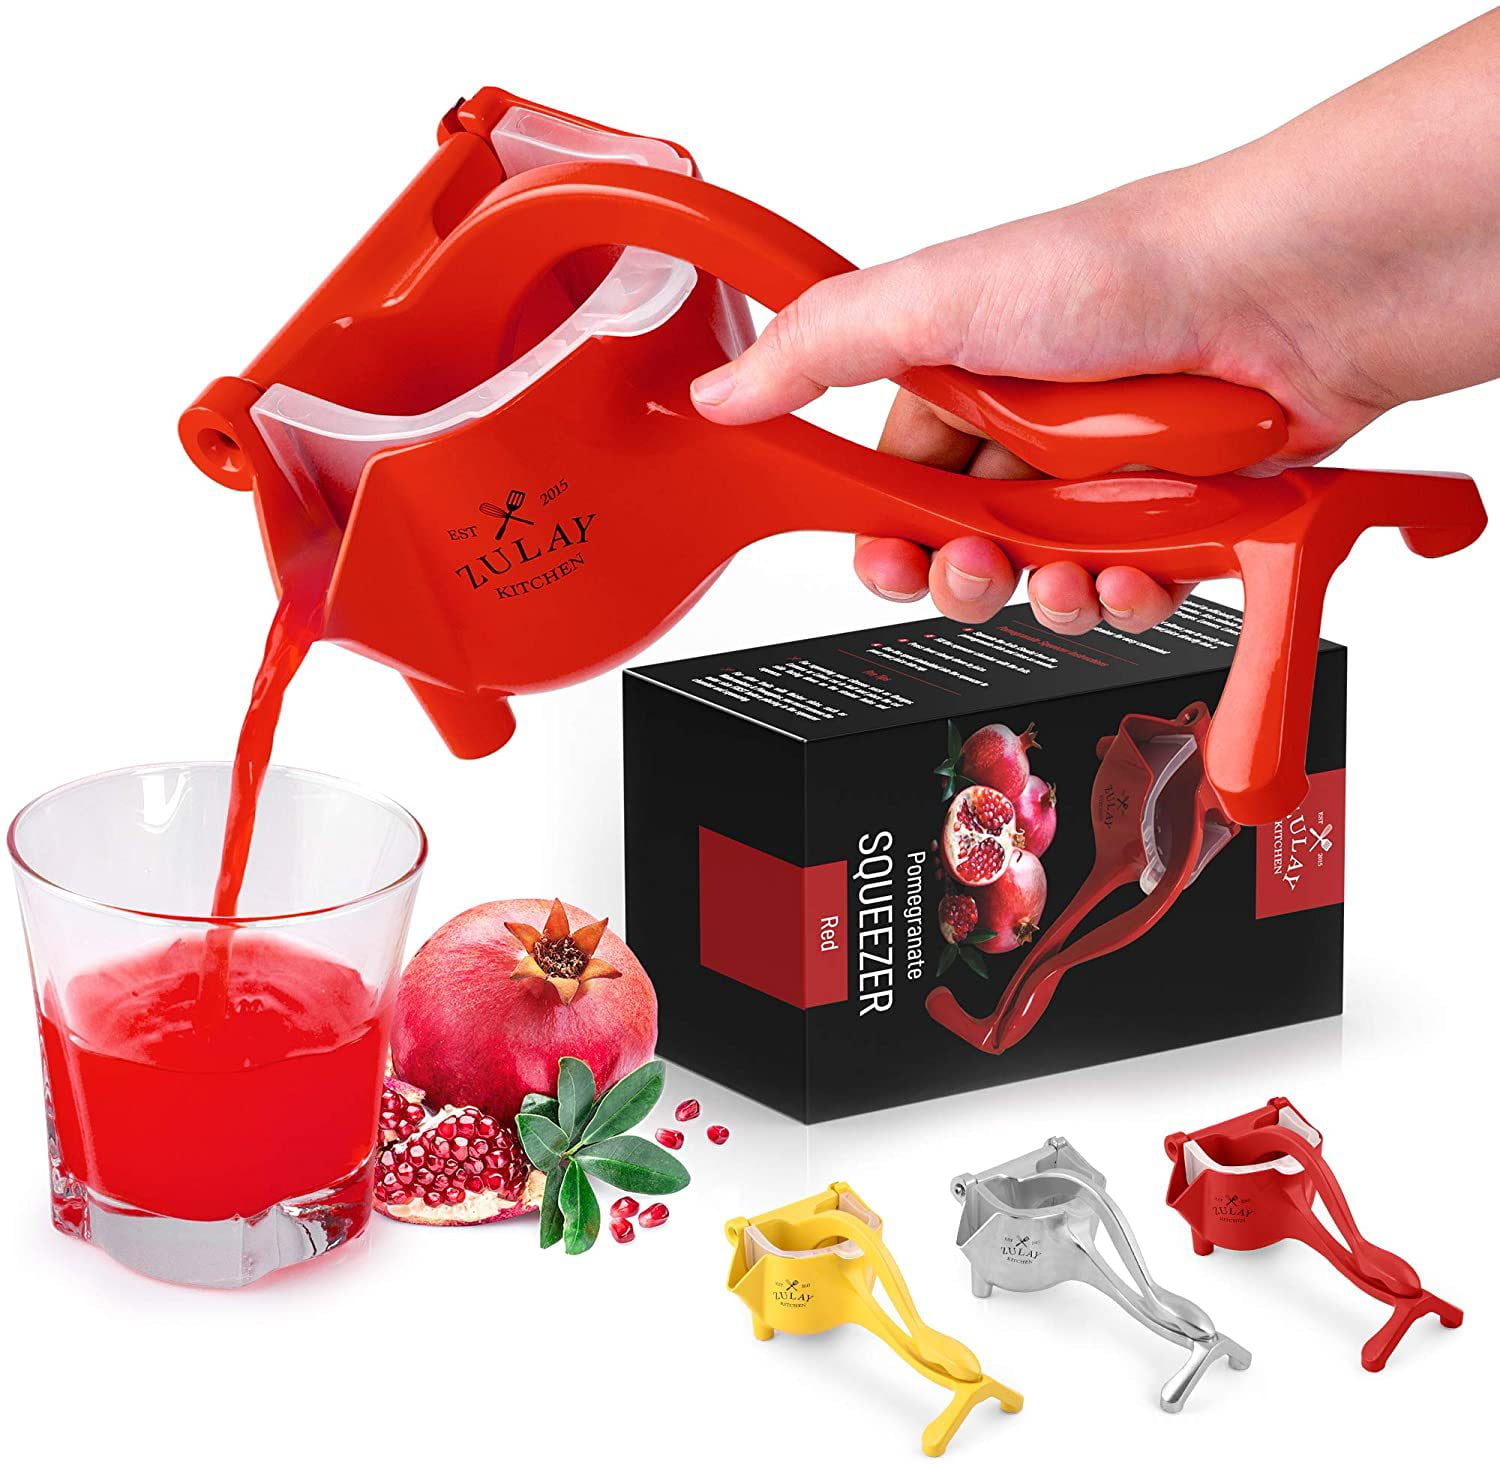 Zulay Kitchen Pomegranate Manual Juicer- Heavy Duty Juice Press